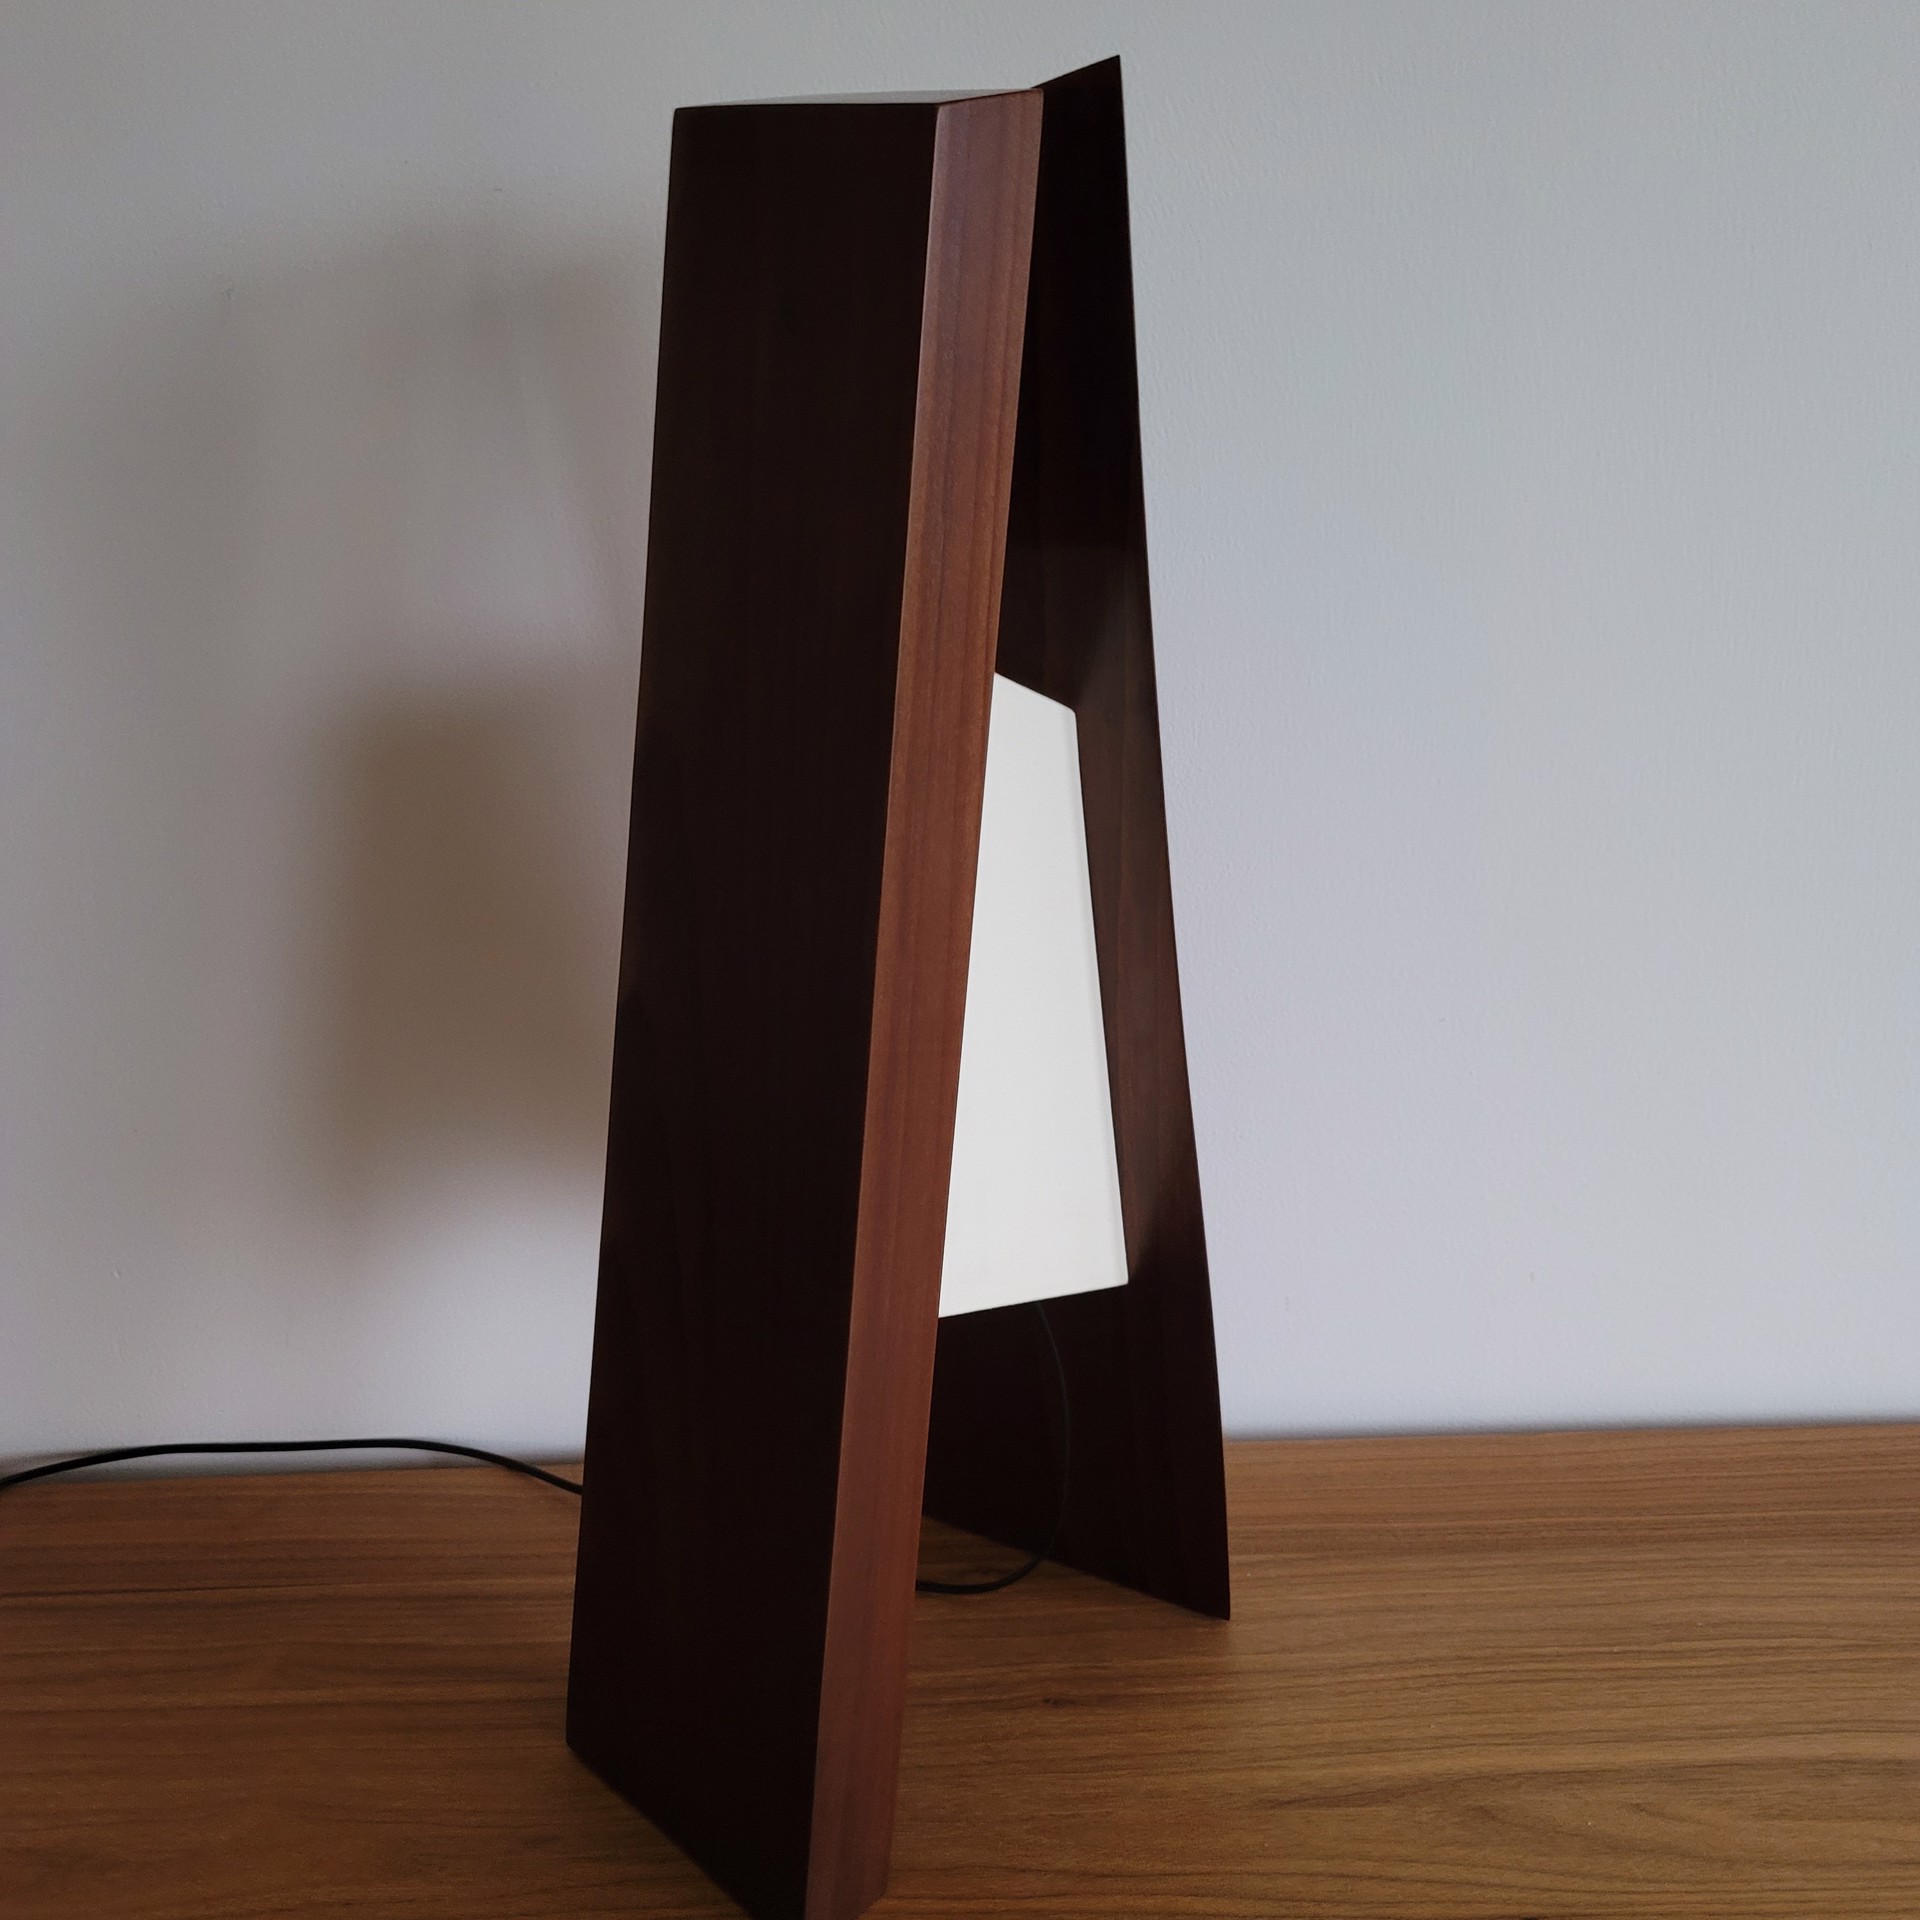 A-Frame Lamp by James Violette